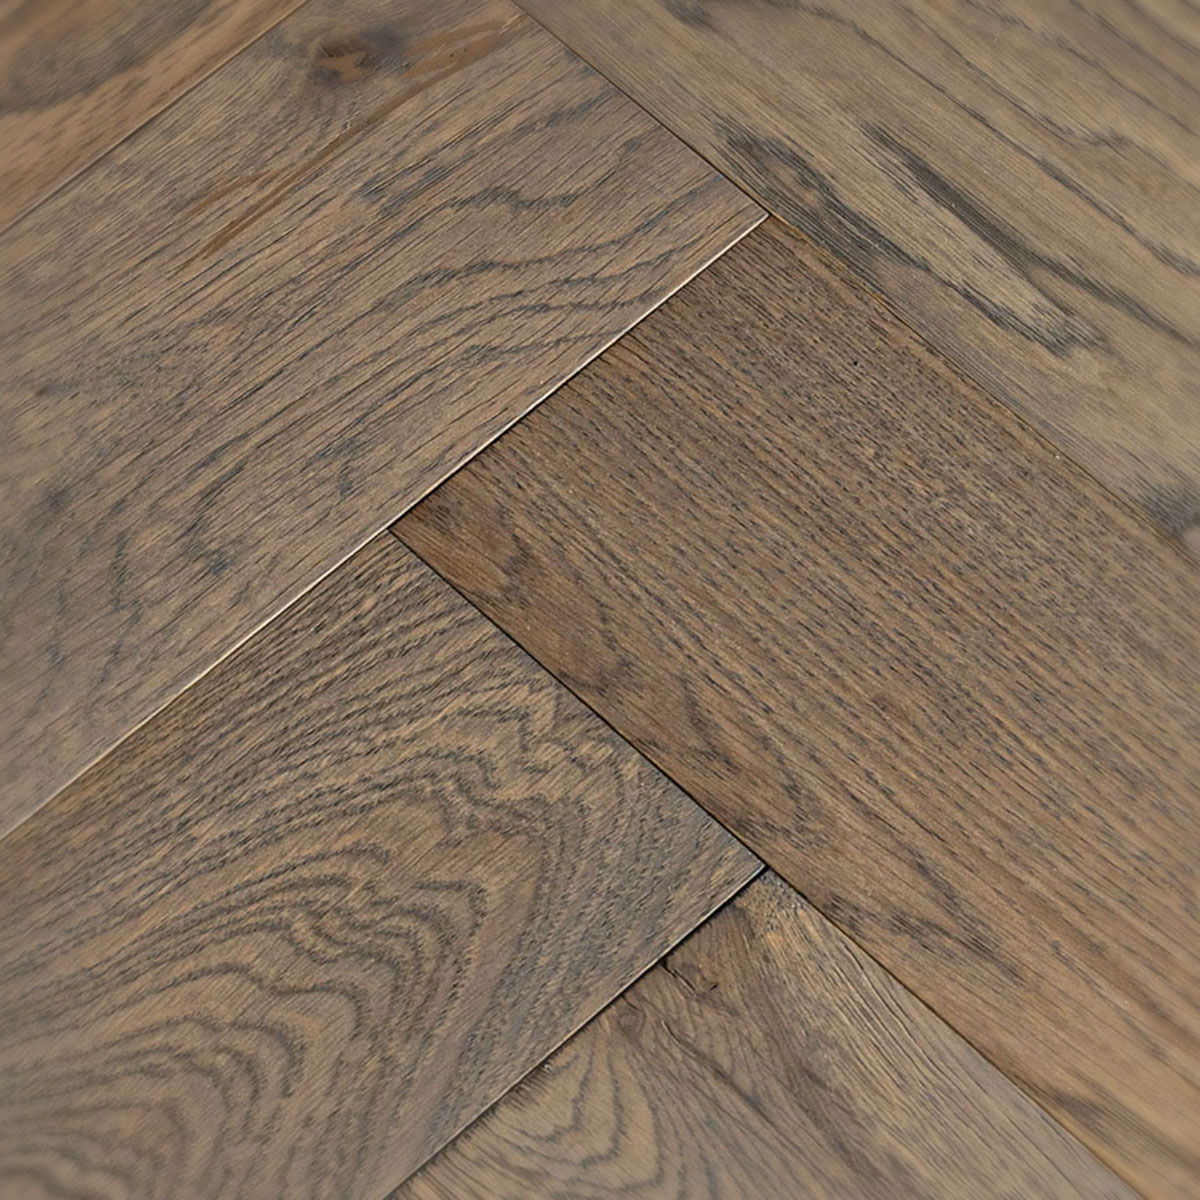 Penley Court - Smokey Grey Herringbone Real Wood Floor 